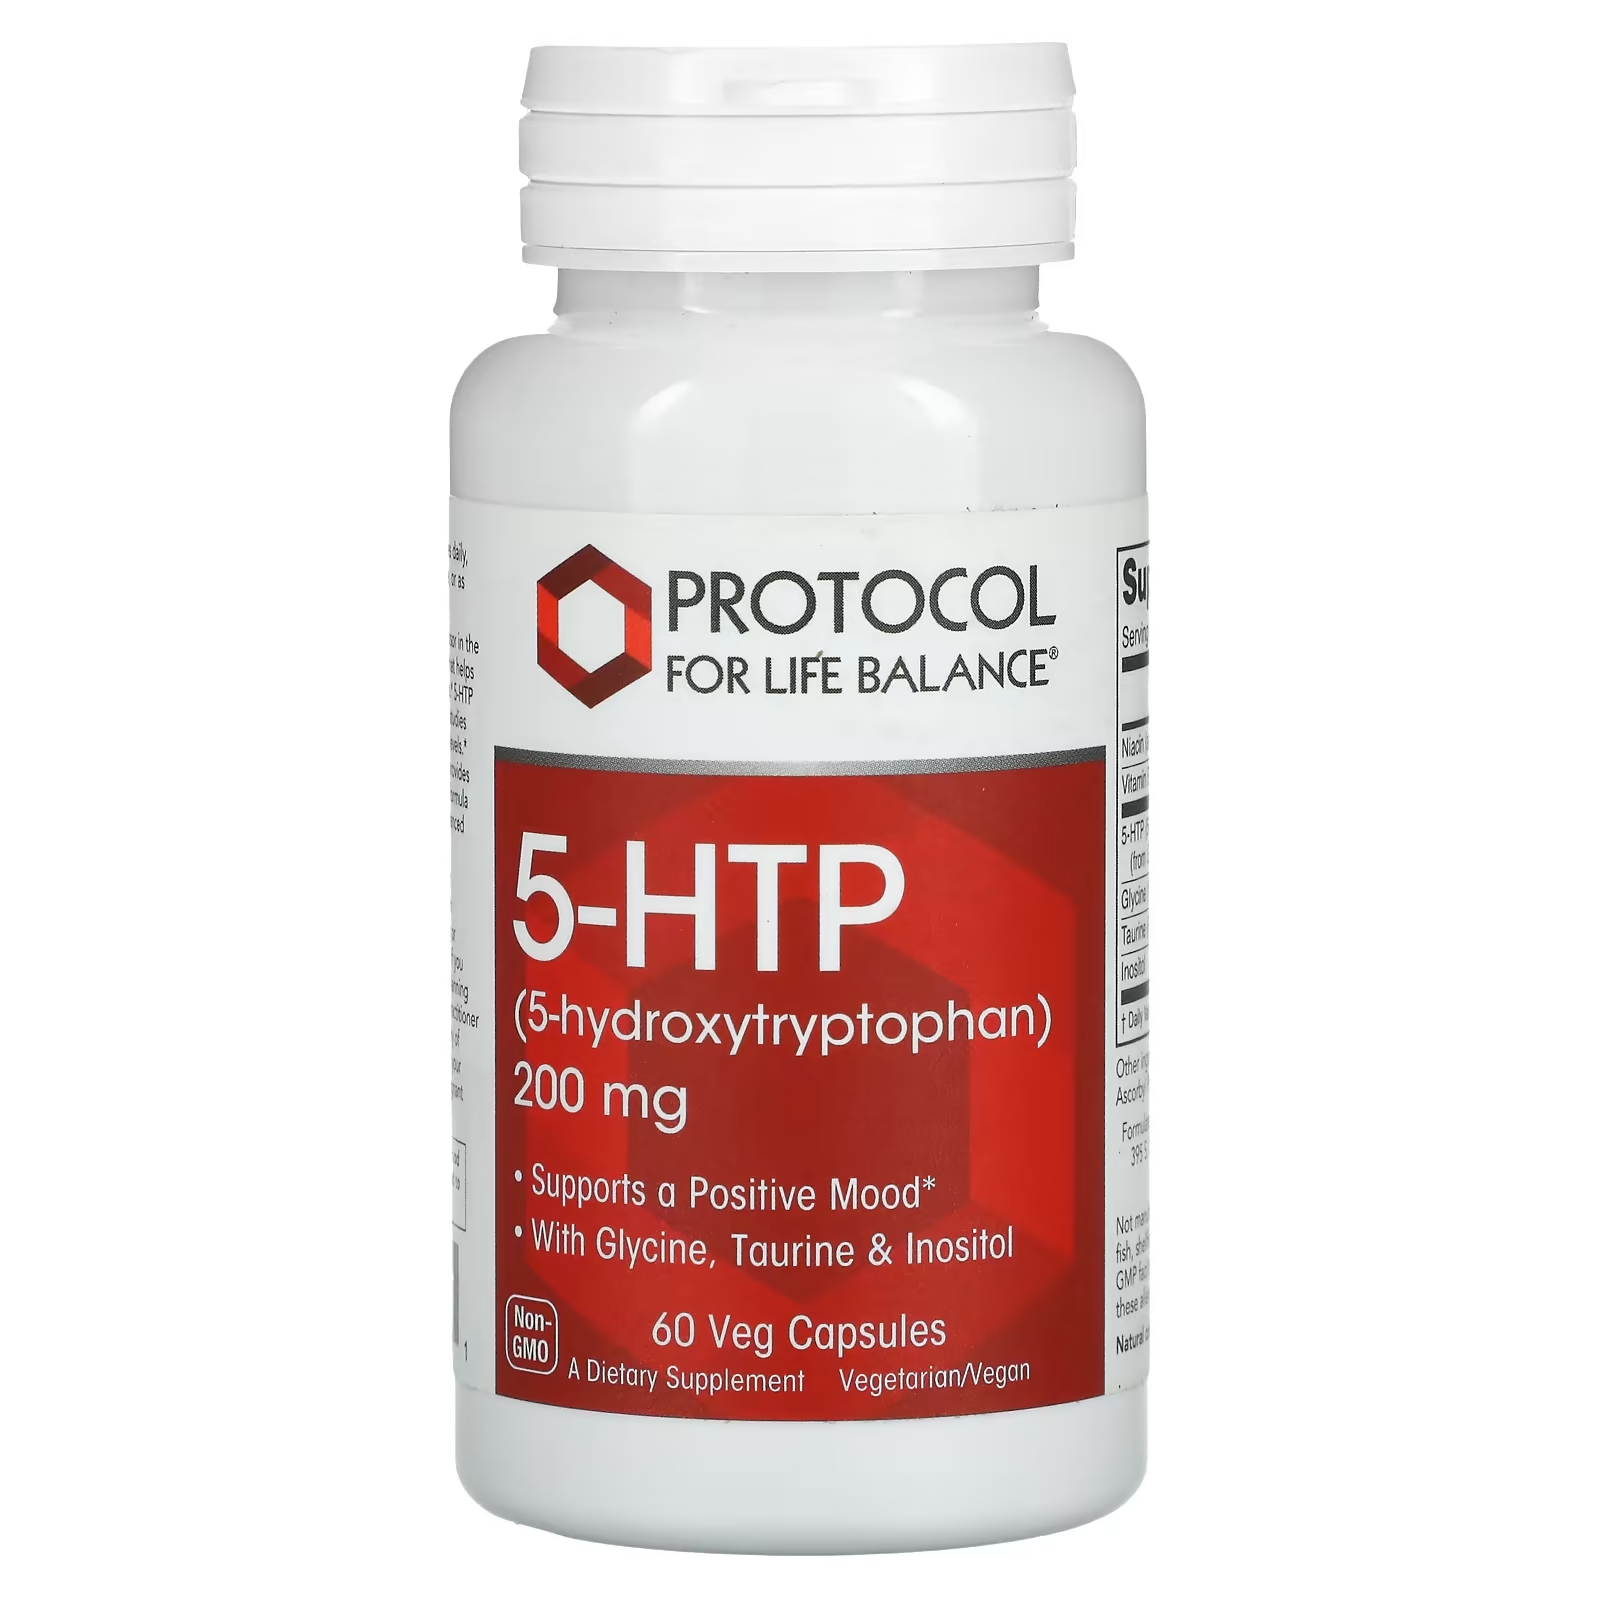 Protocol for Life Balance 5-гидрокситриптофан 5-HTP 200 мг, 60 вегетарианских капсул protocol for life balance 5 гидрокситриптофан 5 htp 200 мг 60 вегетарианских капсул